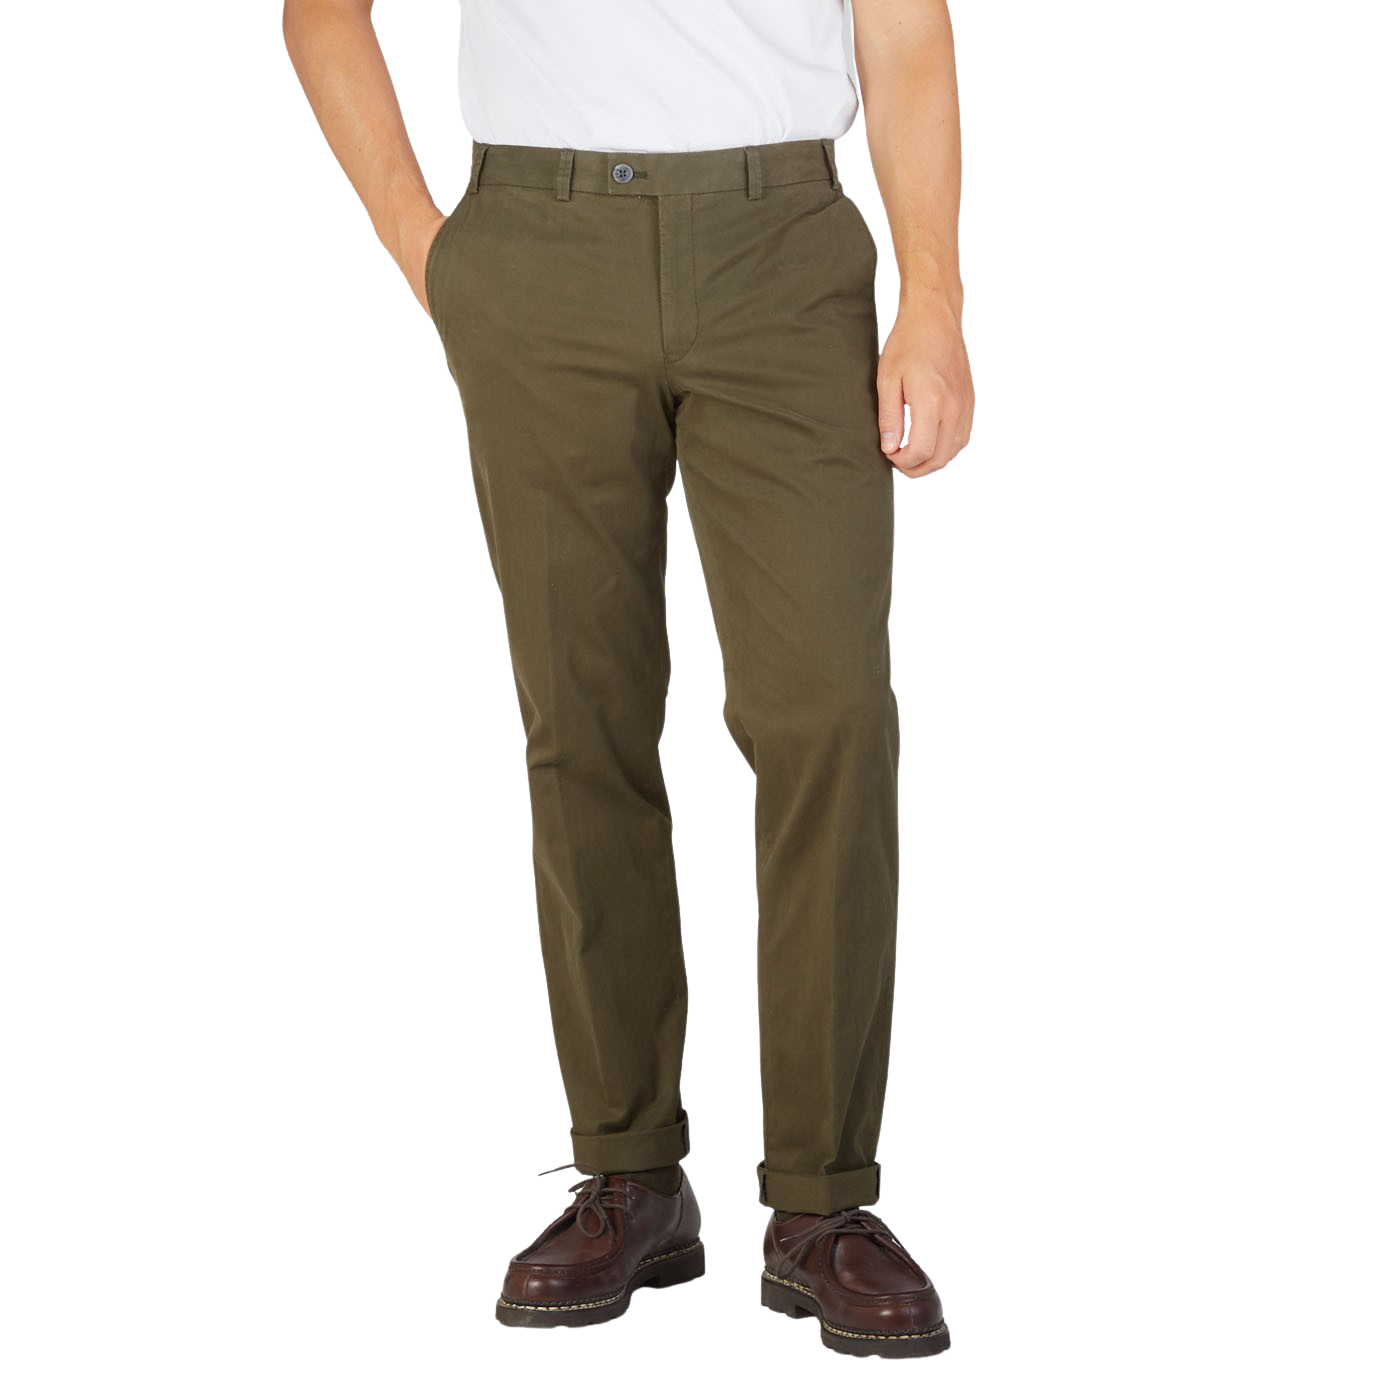 Khaki Solid Cotton Spandex Men Regular Fit Casual Trousers - Selling Fast  at Pantaloons.com